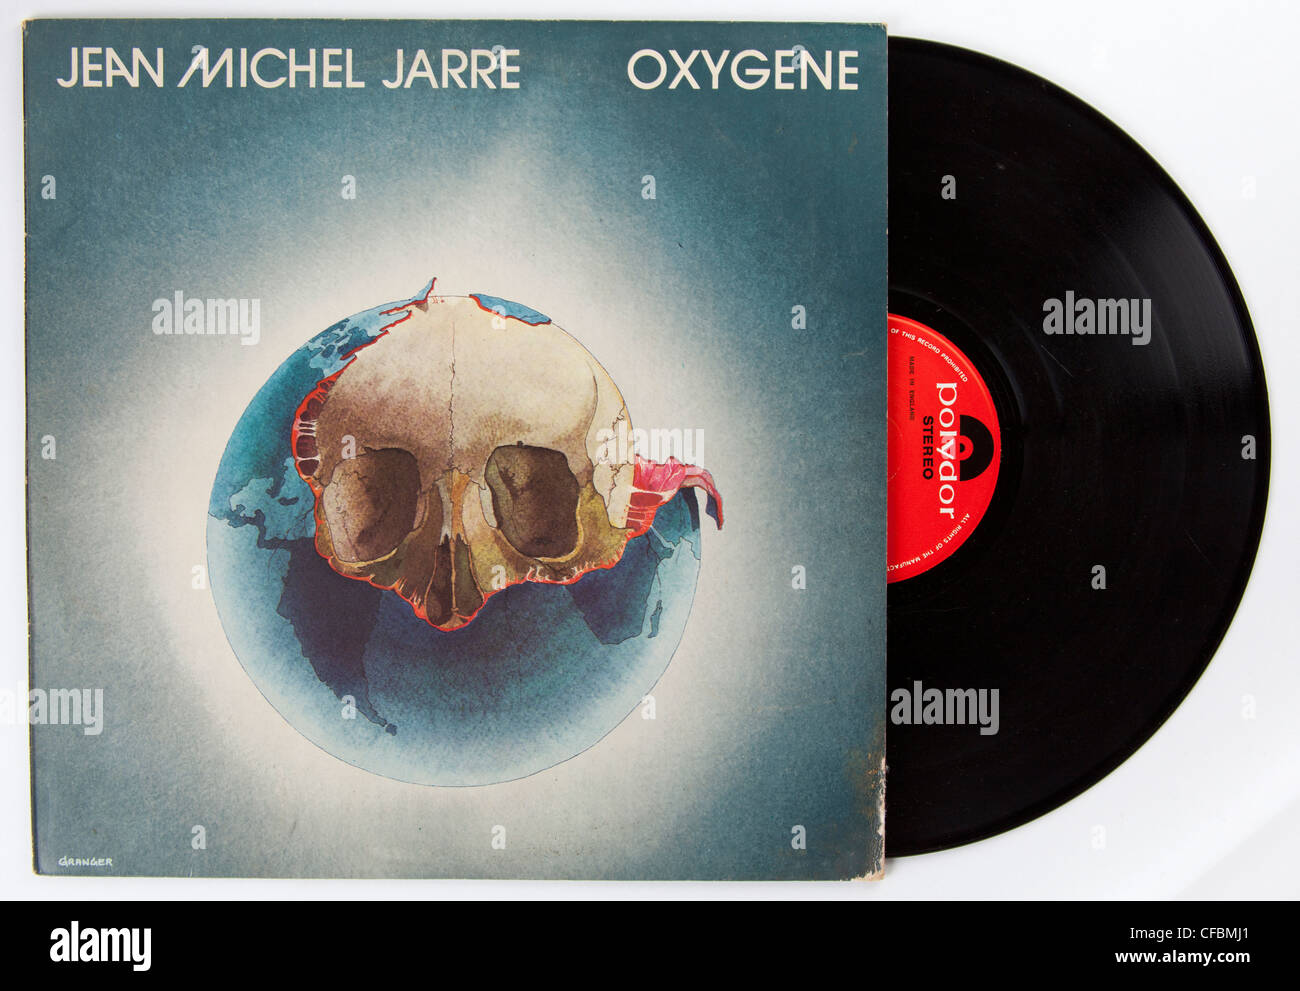 Jean Michel Jarre, Oxygene album Stock Photo - Alamy